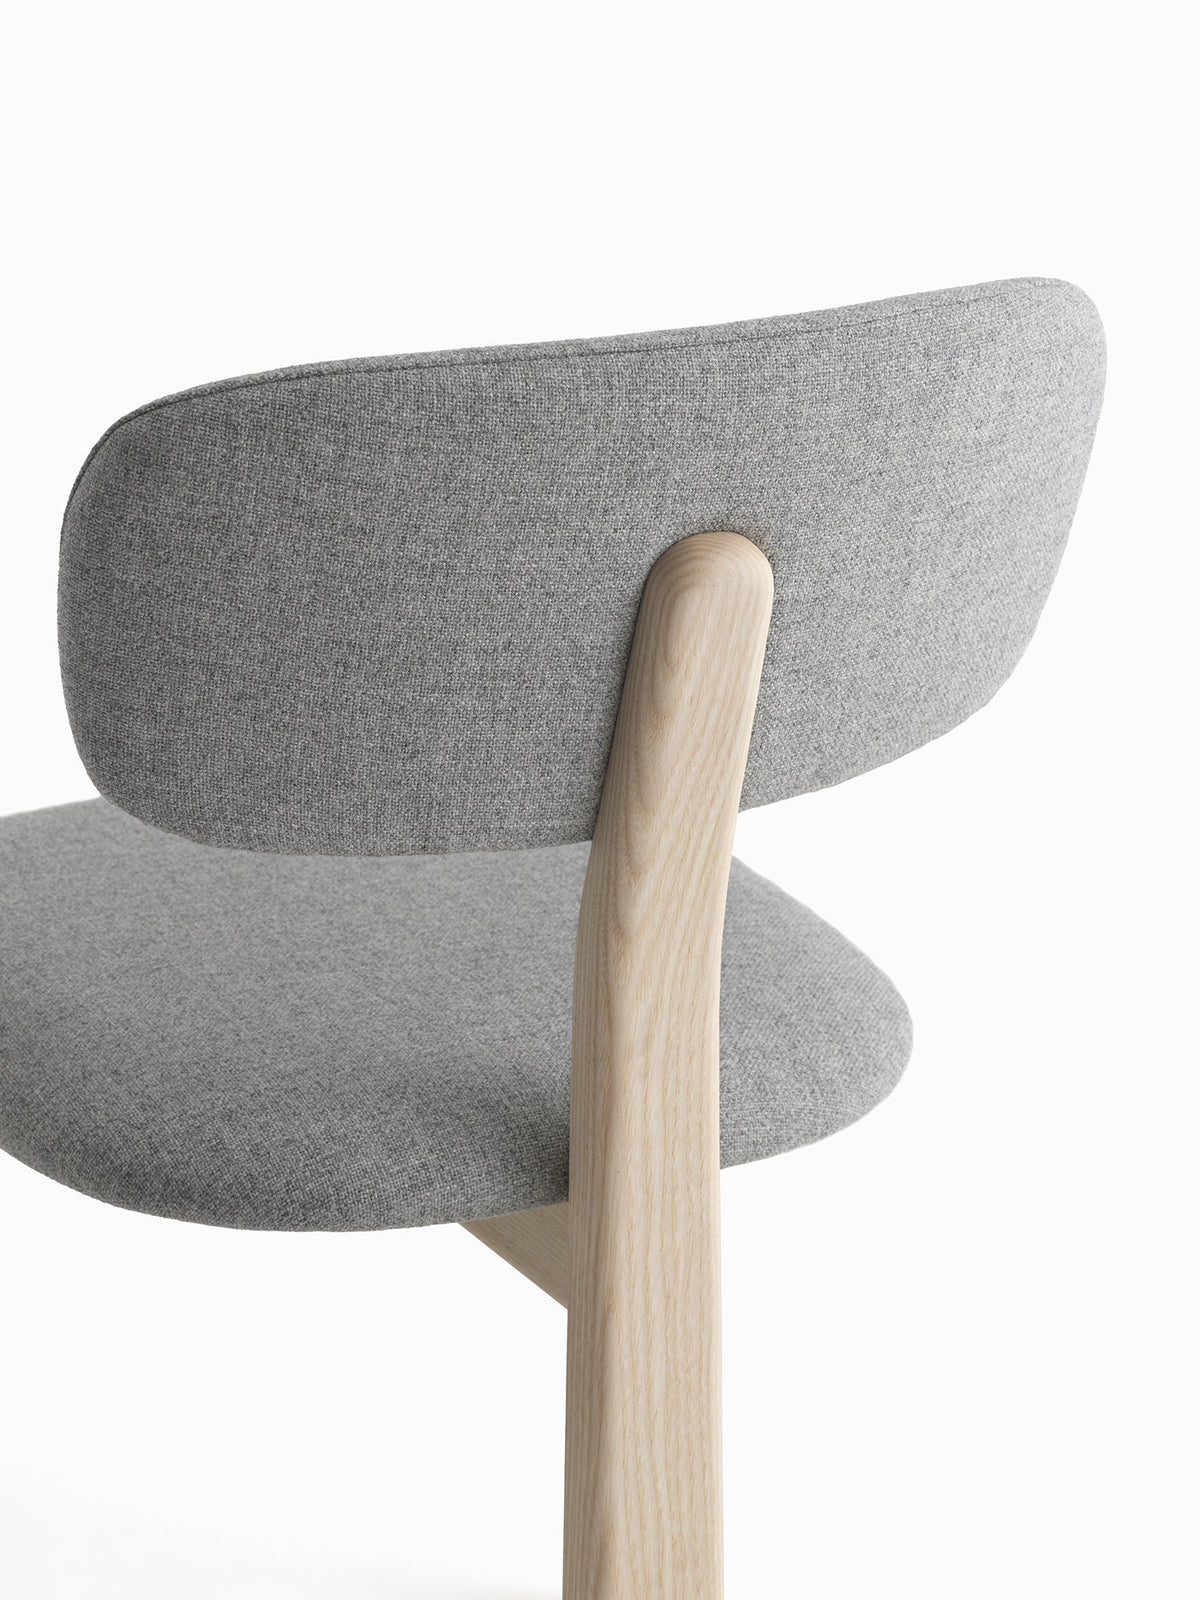 Radice TI Side Chair-Passoni Design-Contract Furniture Store